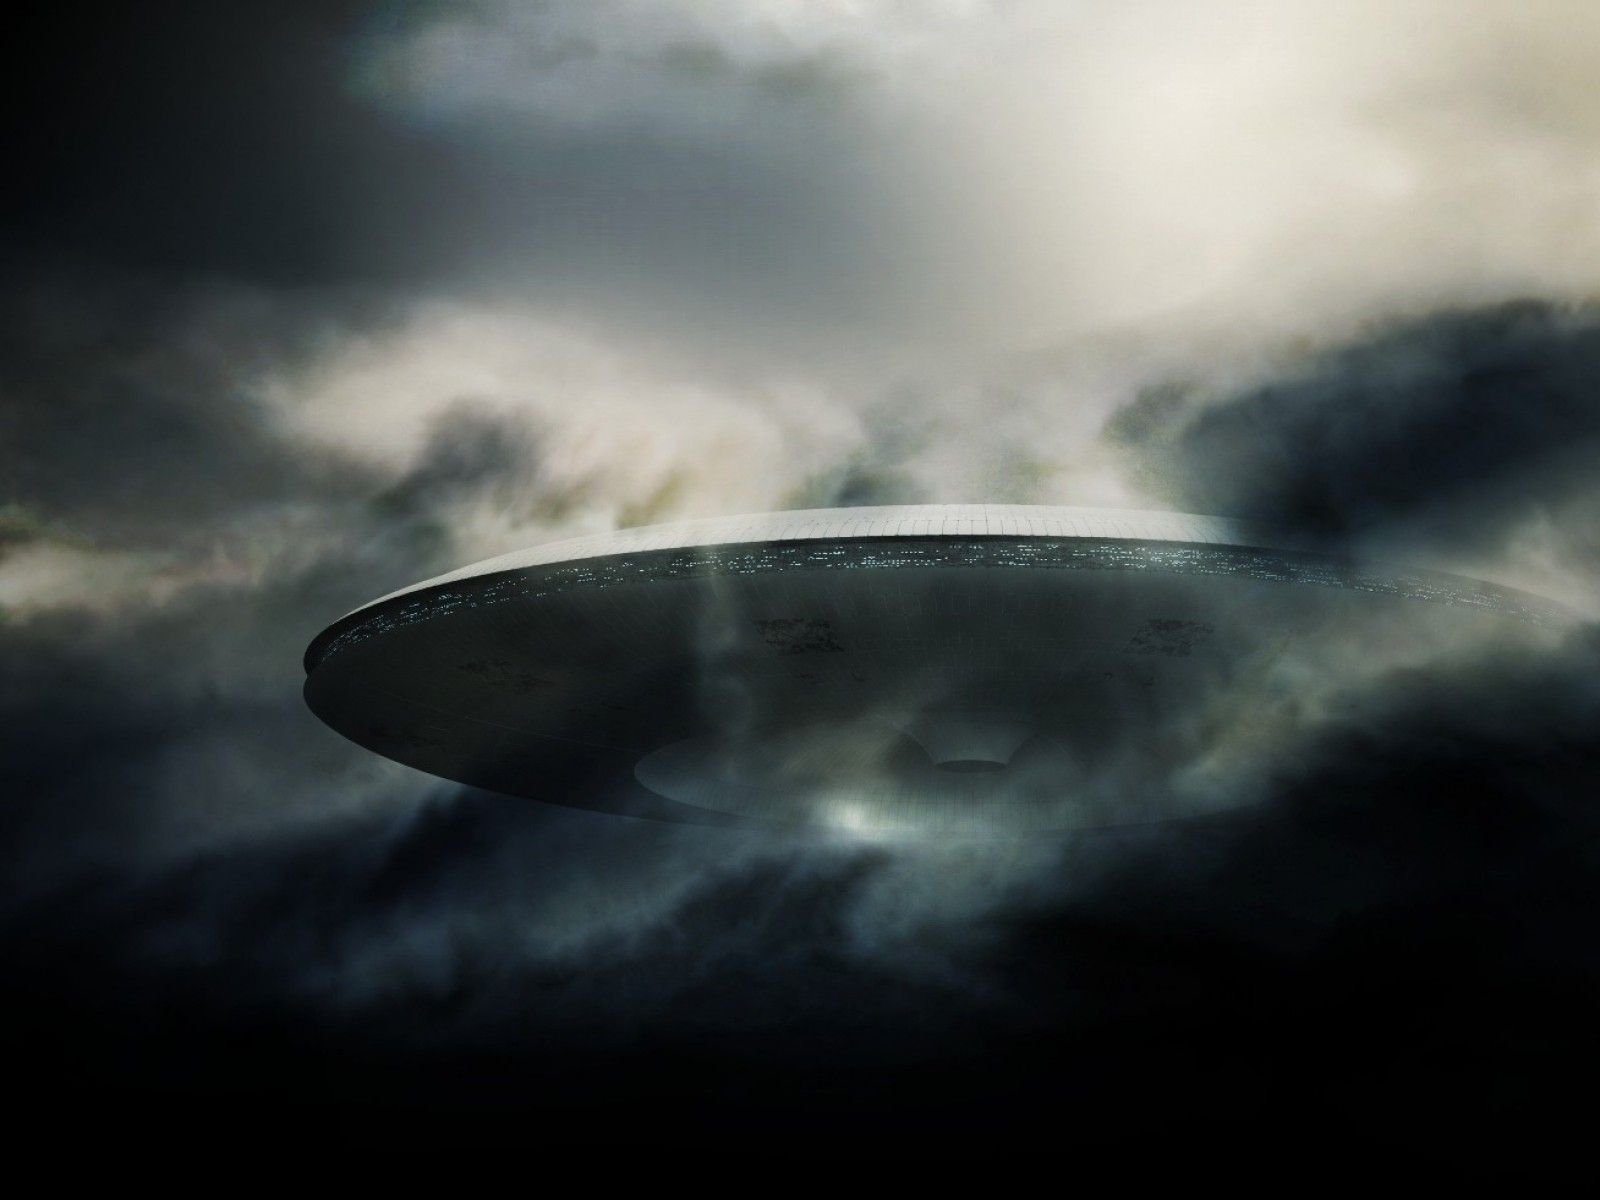 Sci Fi Alien Spaceship Wallpapers